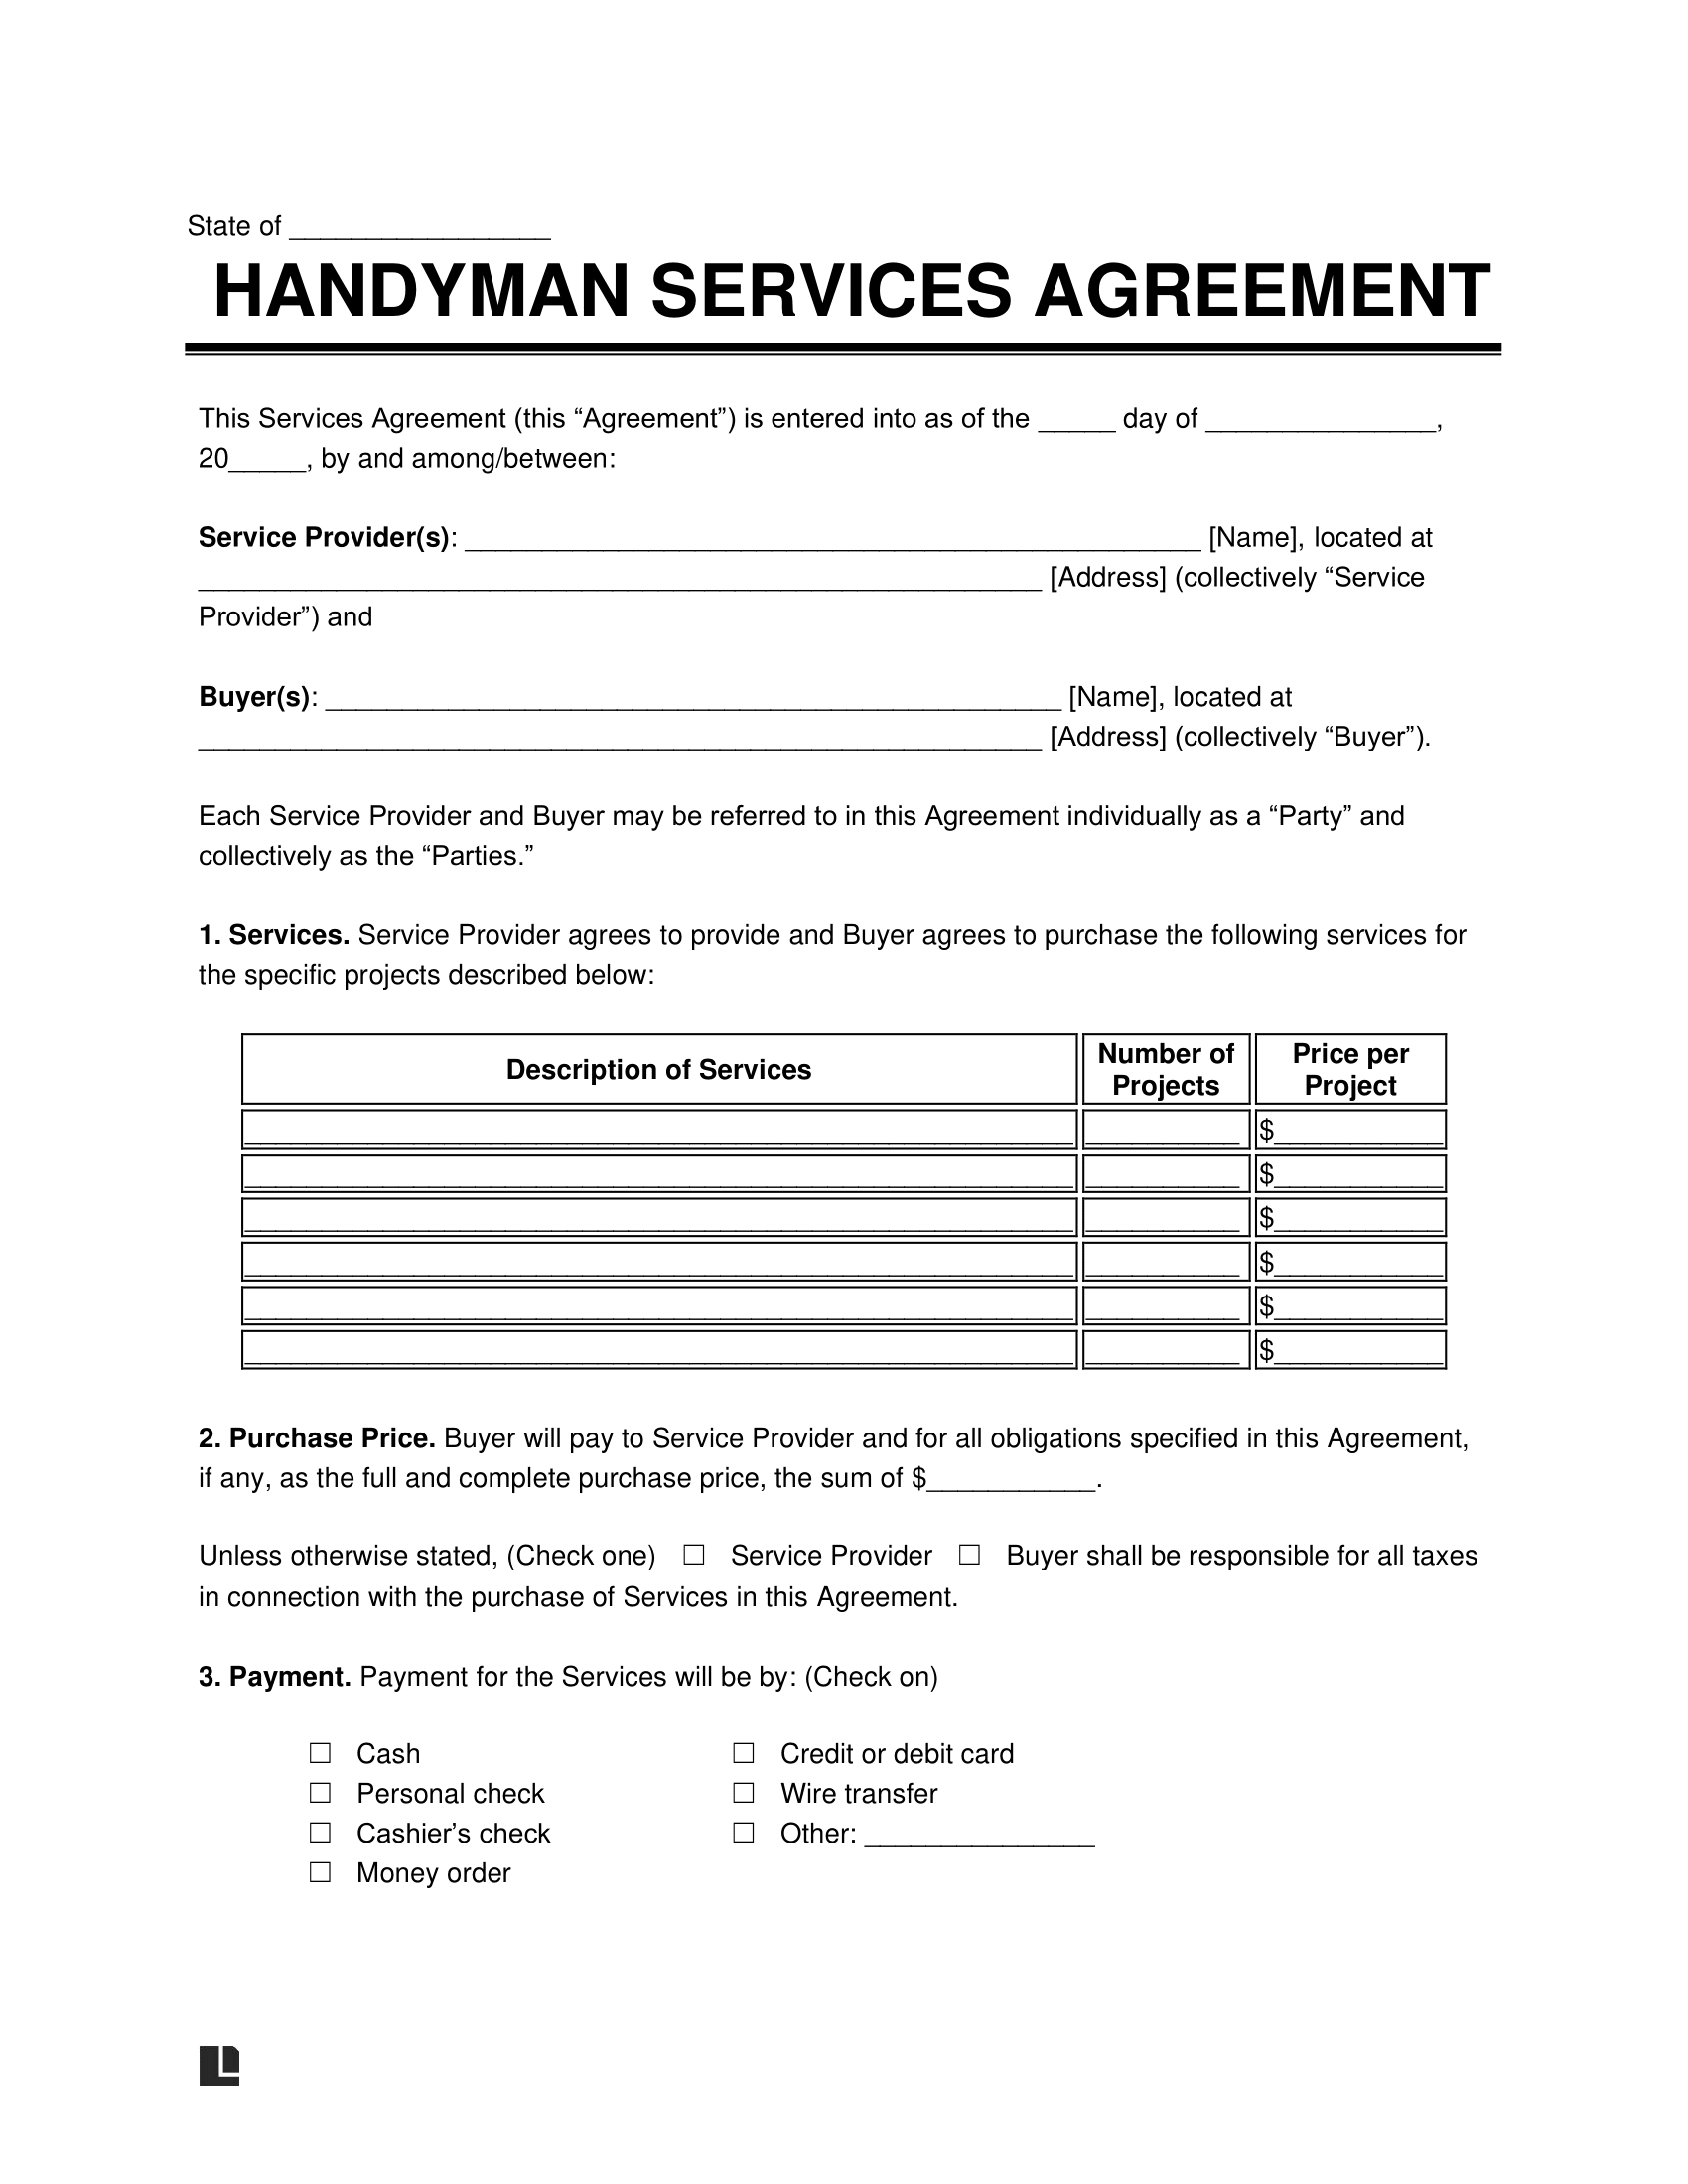 Handyman Contract Template